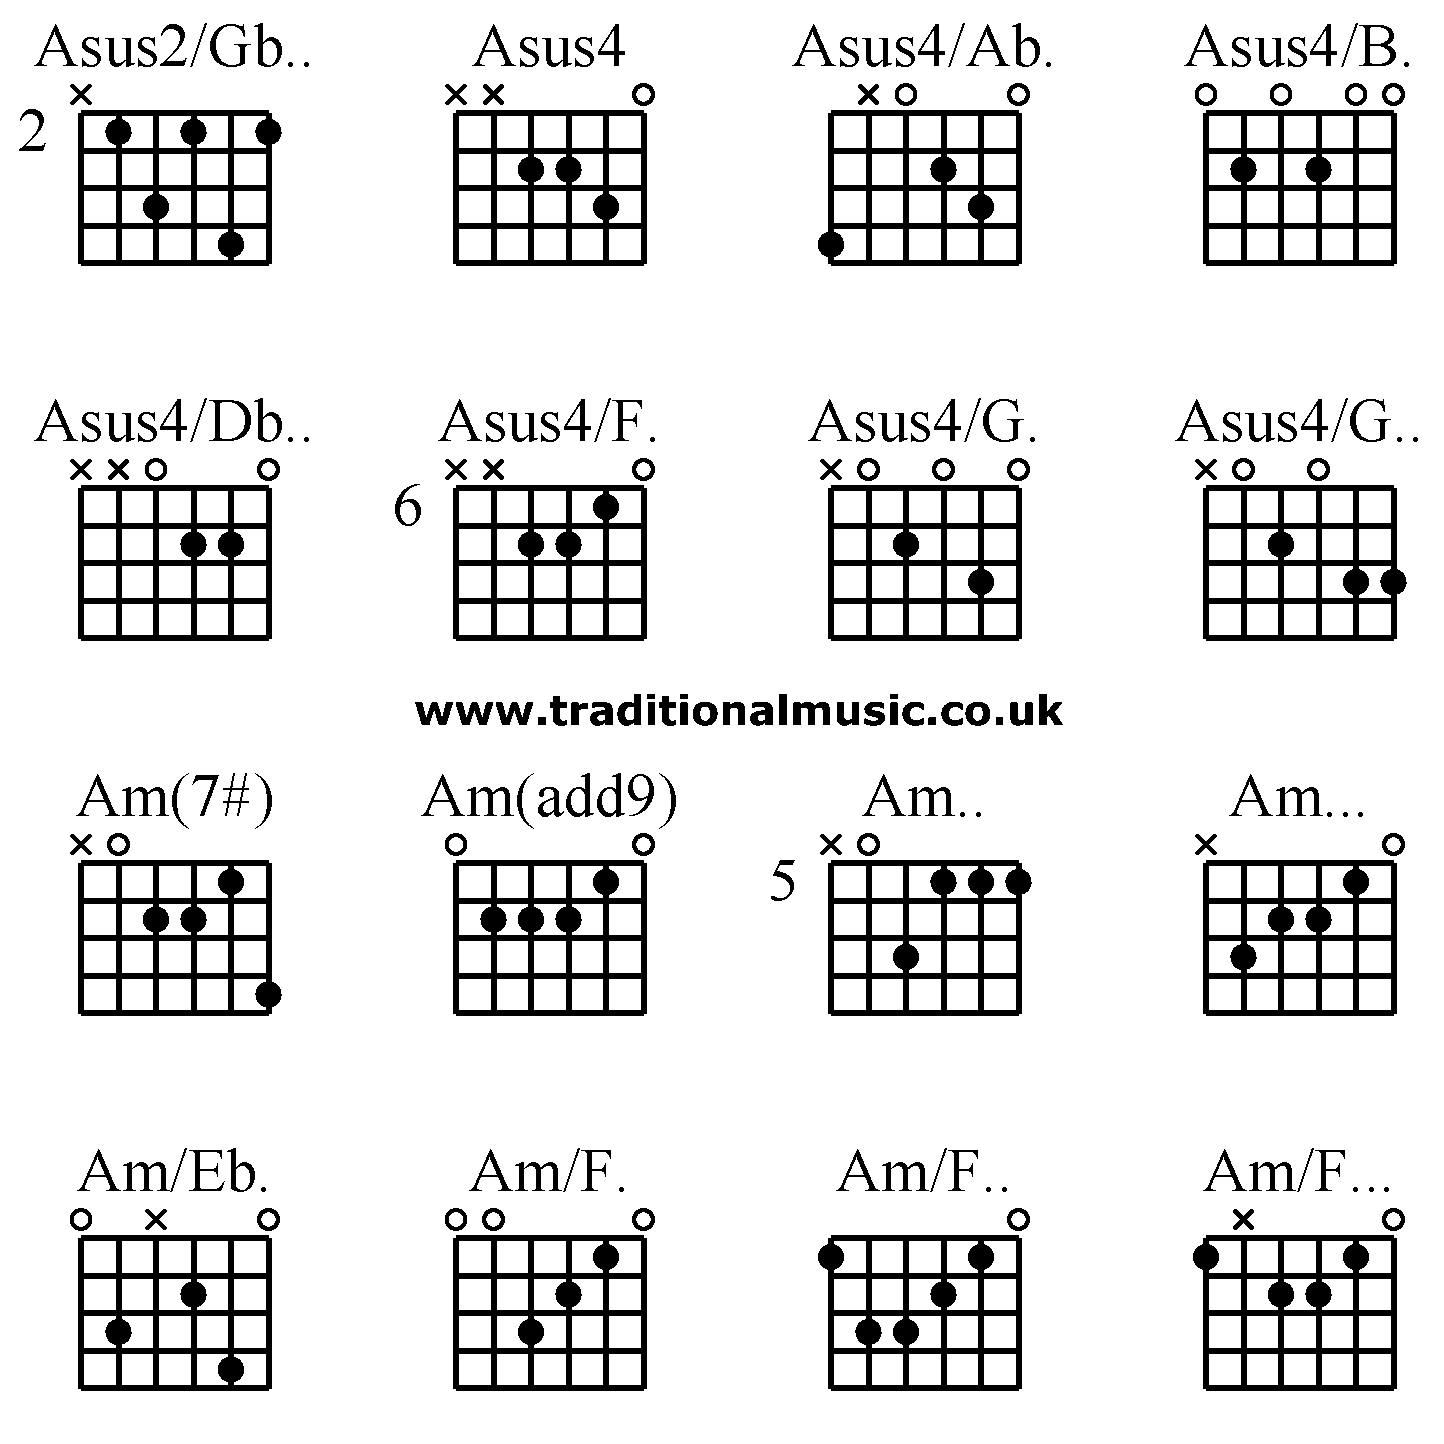 Advanced guitar chords: Asus2/Gb.. Asus4 Asus4/Ab. Asus4/B. Asus4/Db.. Asus4/F. Asus4/G. Asus4/G.. Am(7#) Am(add9) Am.. Am... Am/Eb. Am/F. Am/F.. Am/F...